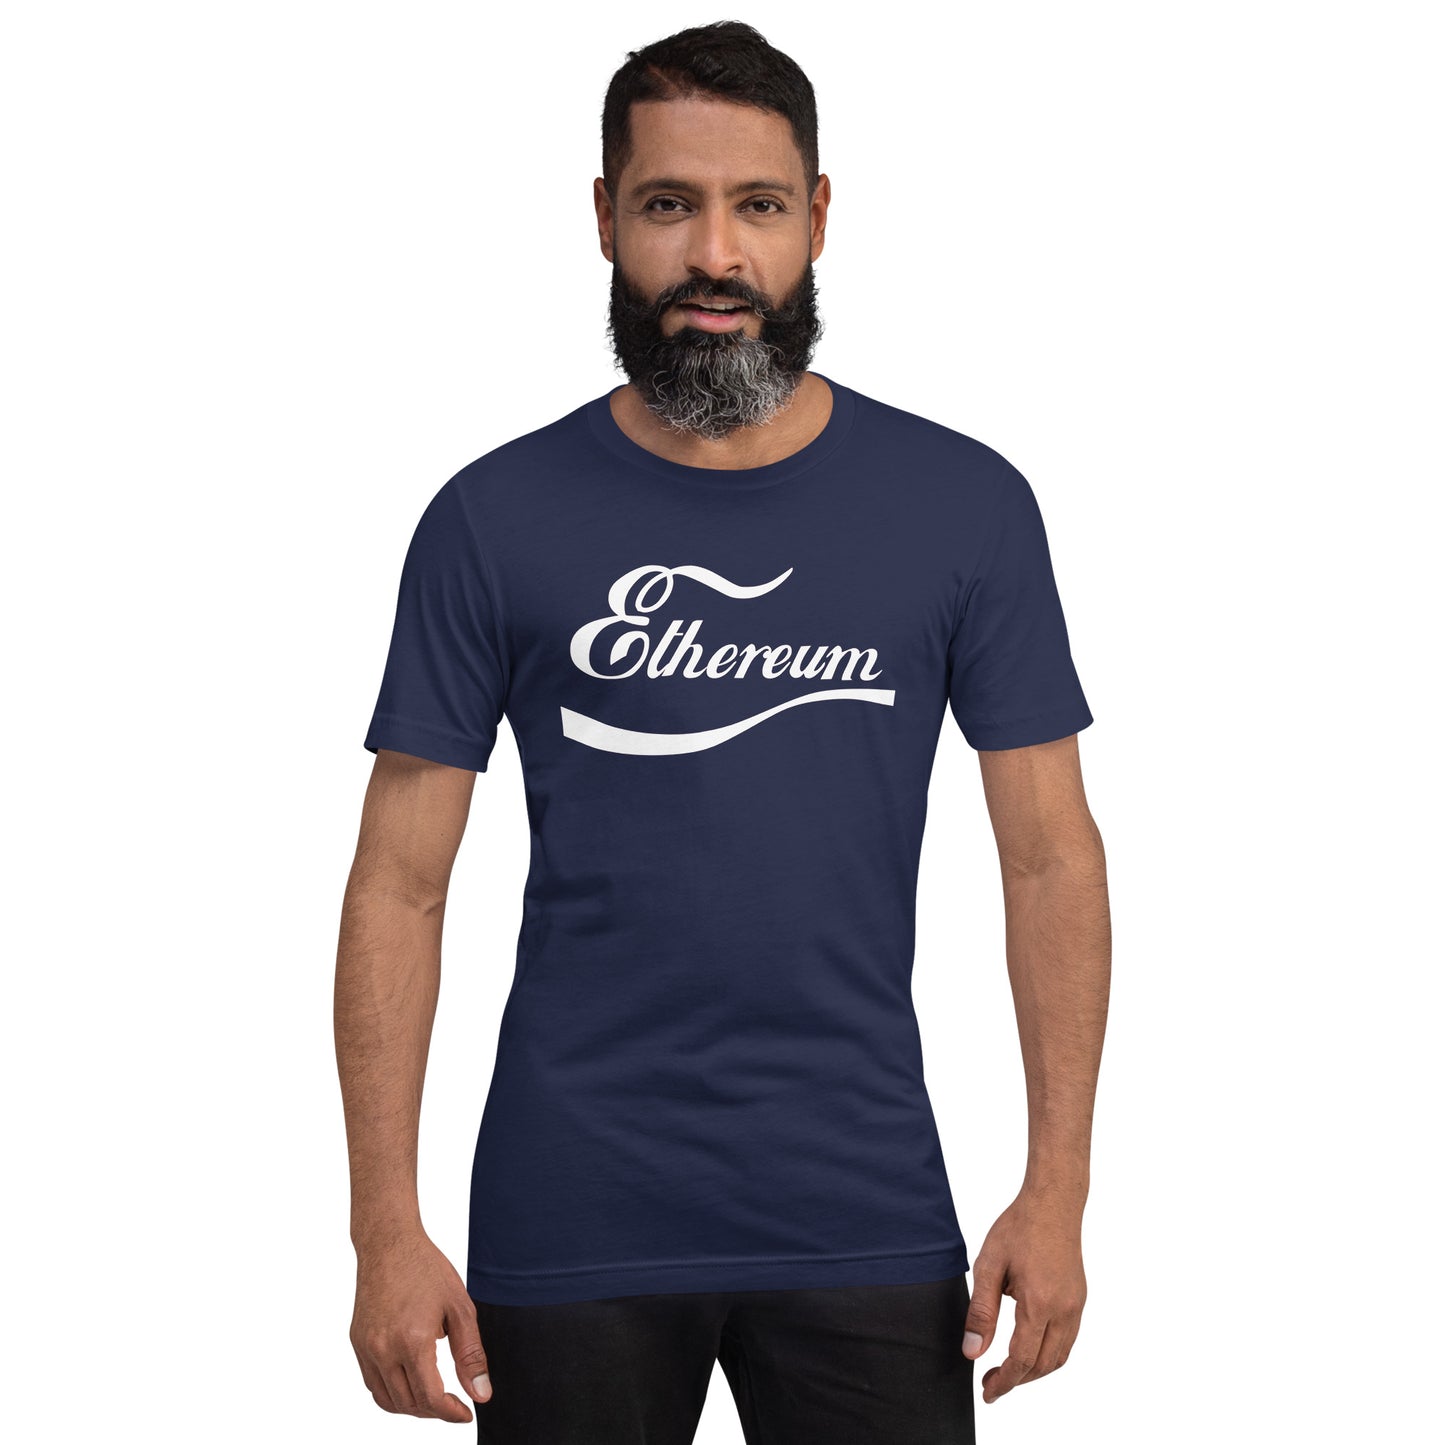 Ethereum Cola | Shirts & Tops | ethereum-cola-tee | printful